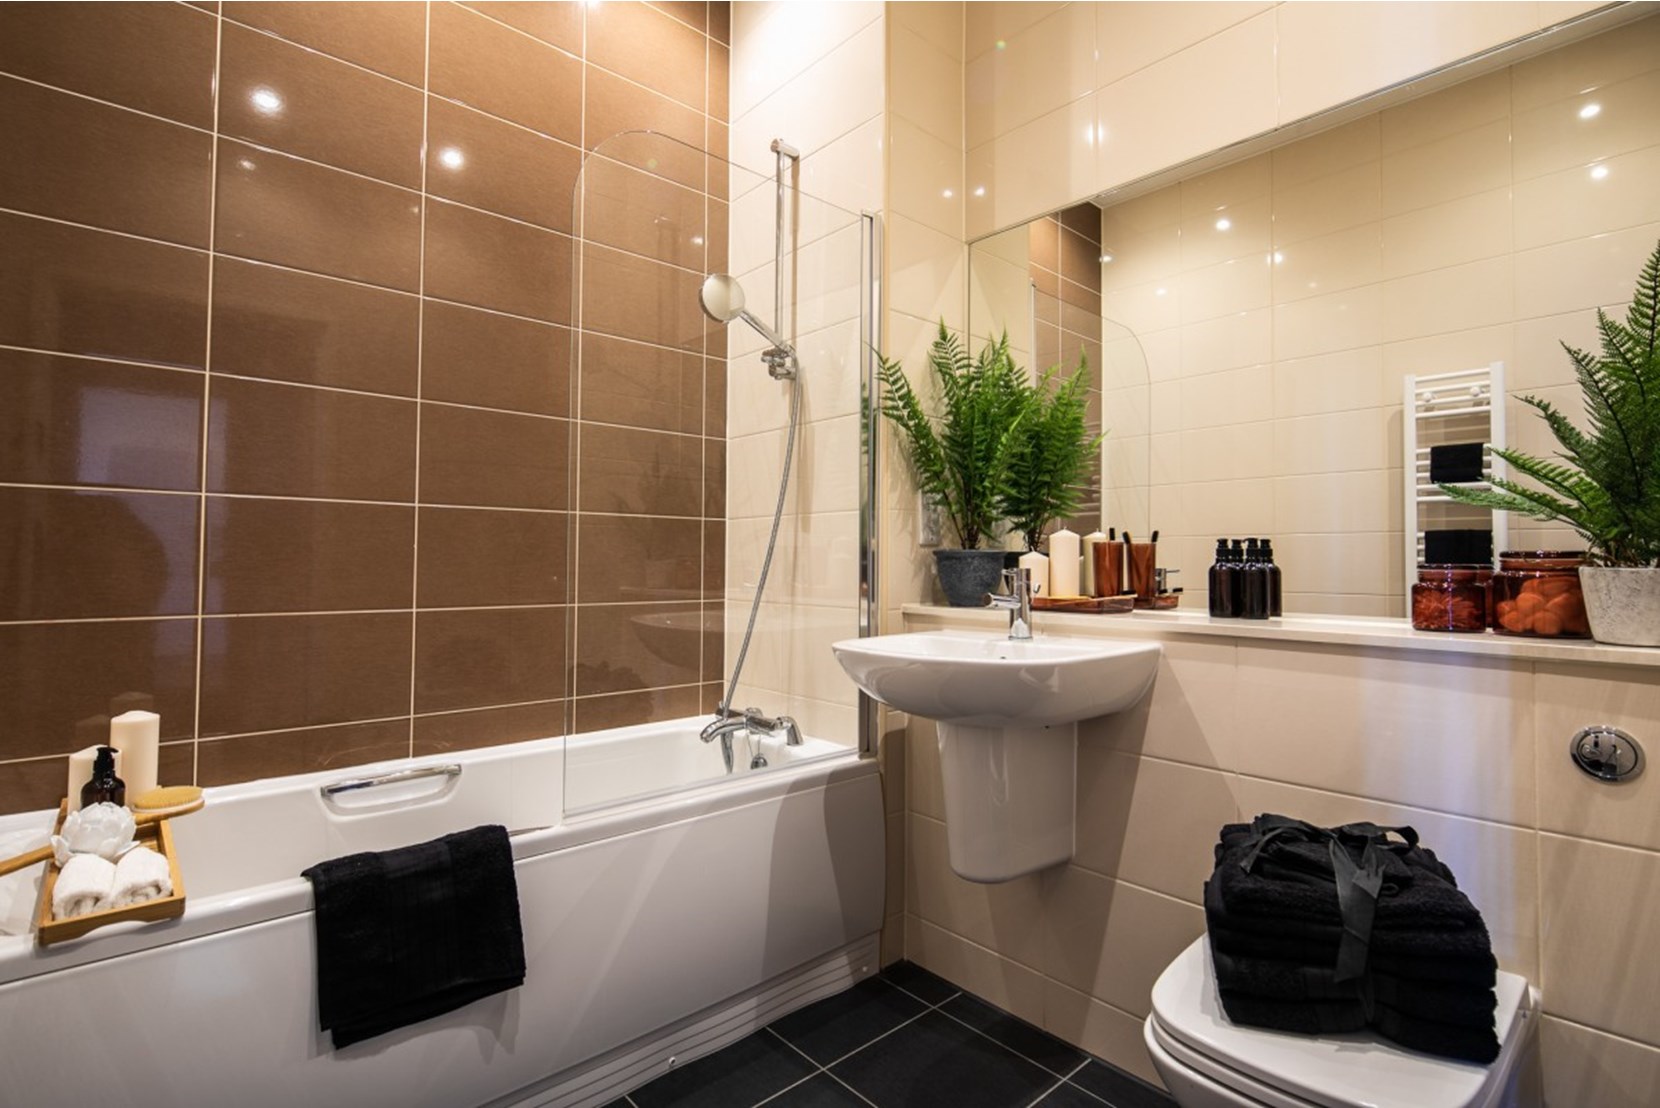 Apartment-Allsop-The-Keel-Liverpool-Merseyside-Interior-Bathroom